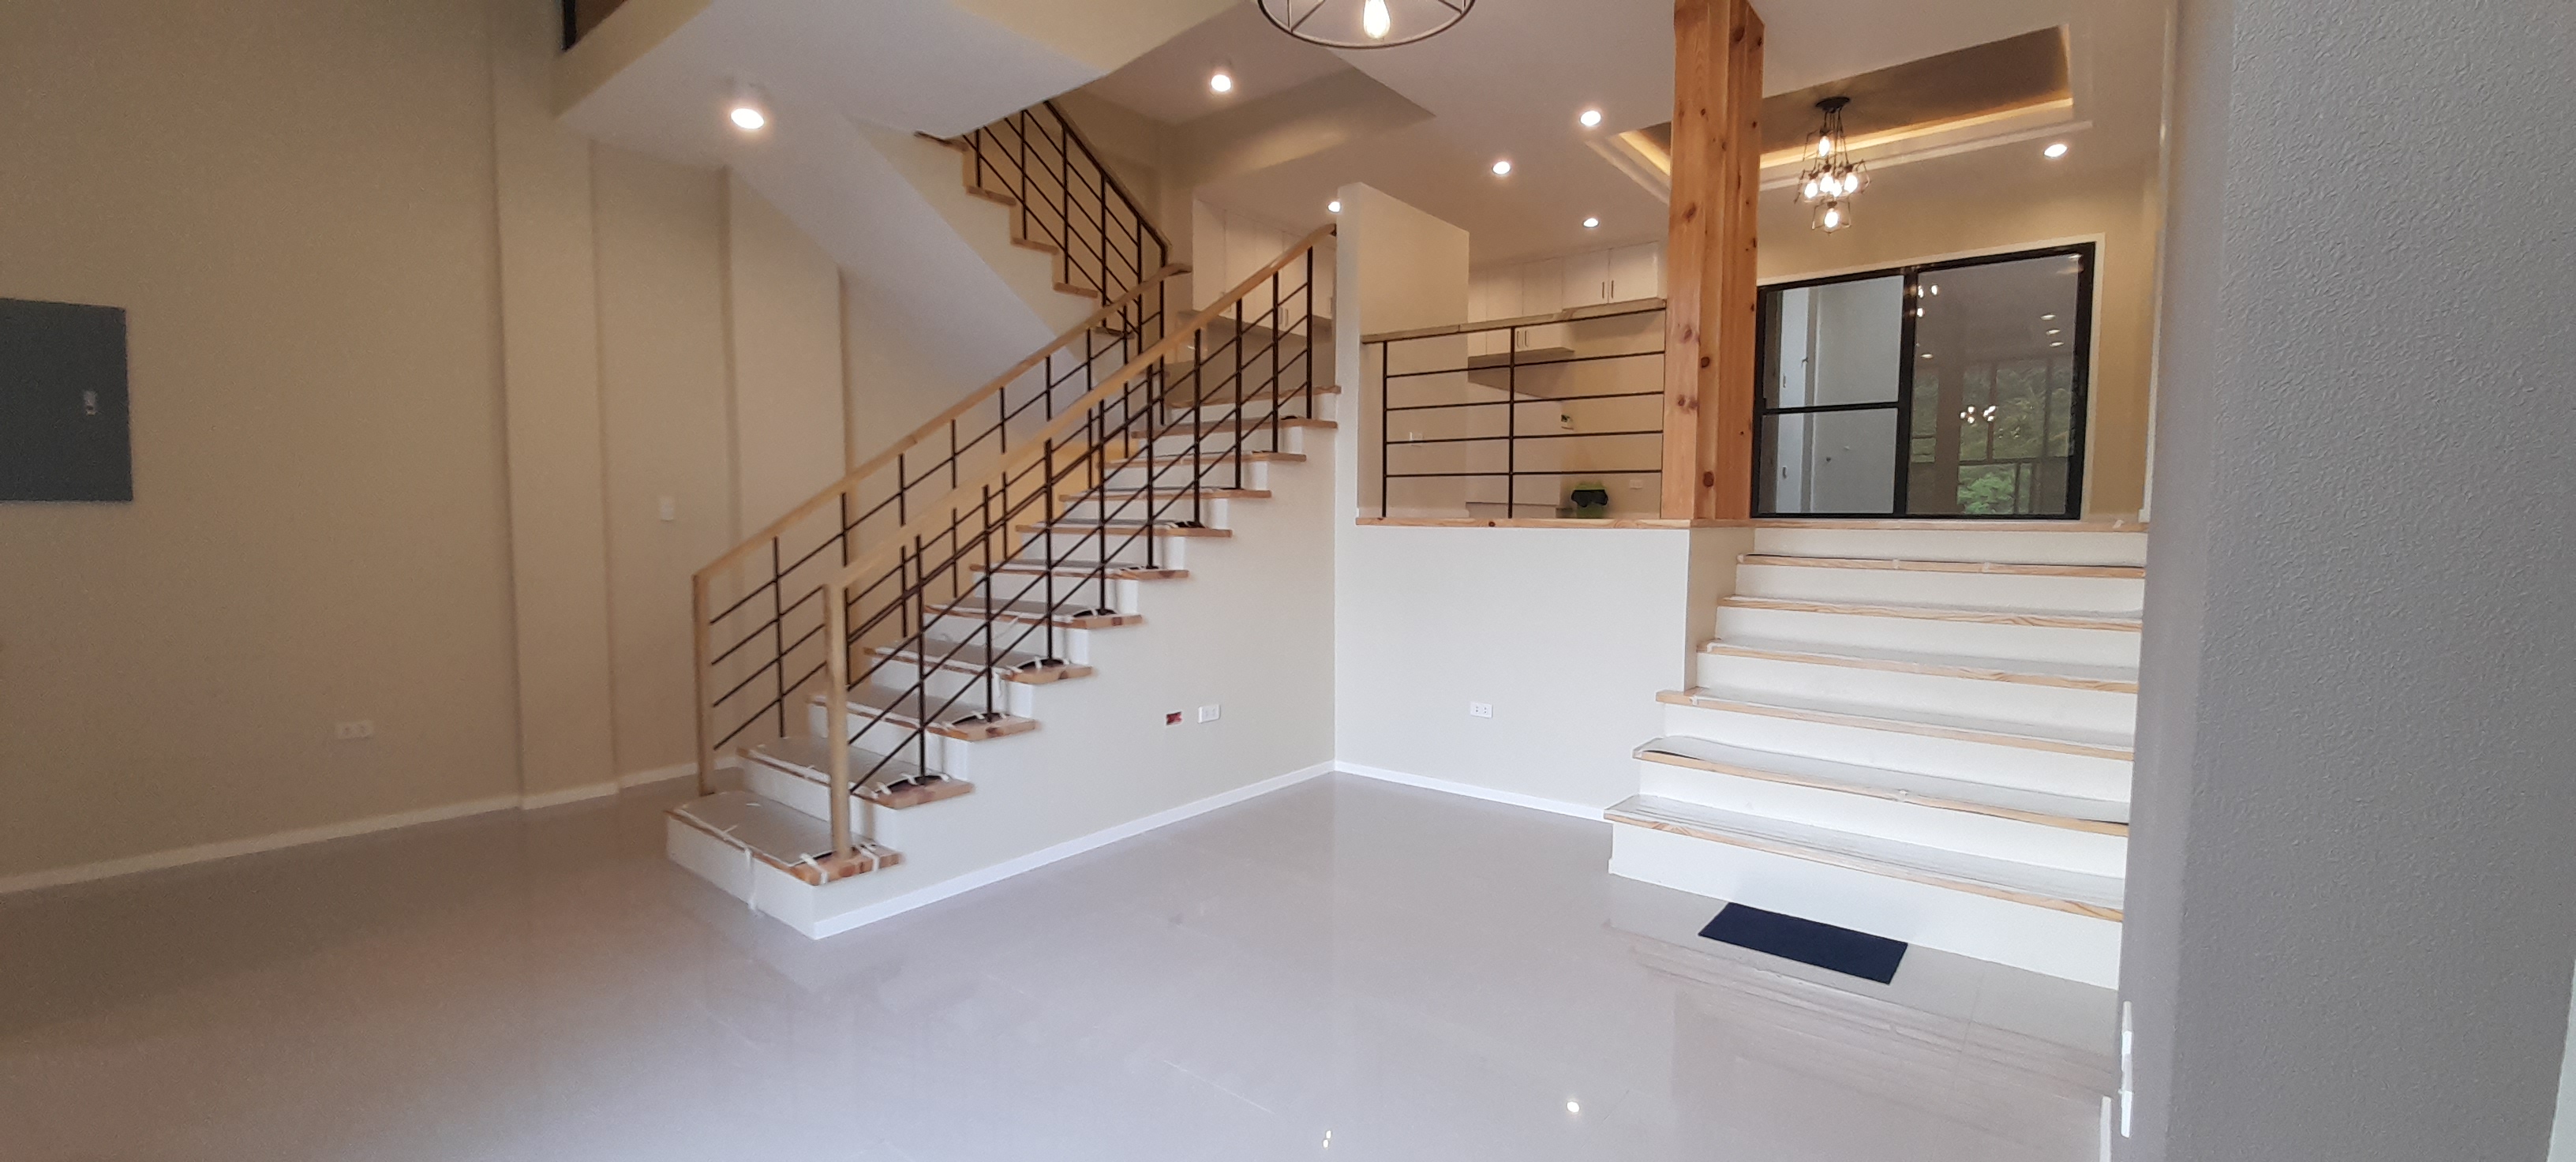 4-bedroom-brand-new-duplex-house-and-lot-in-banawa-cebu-city-cebu